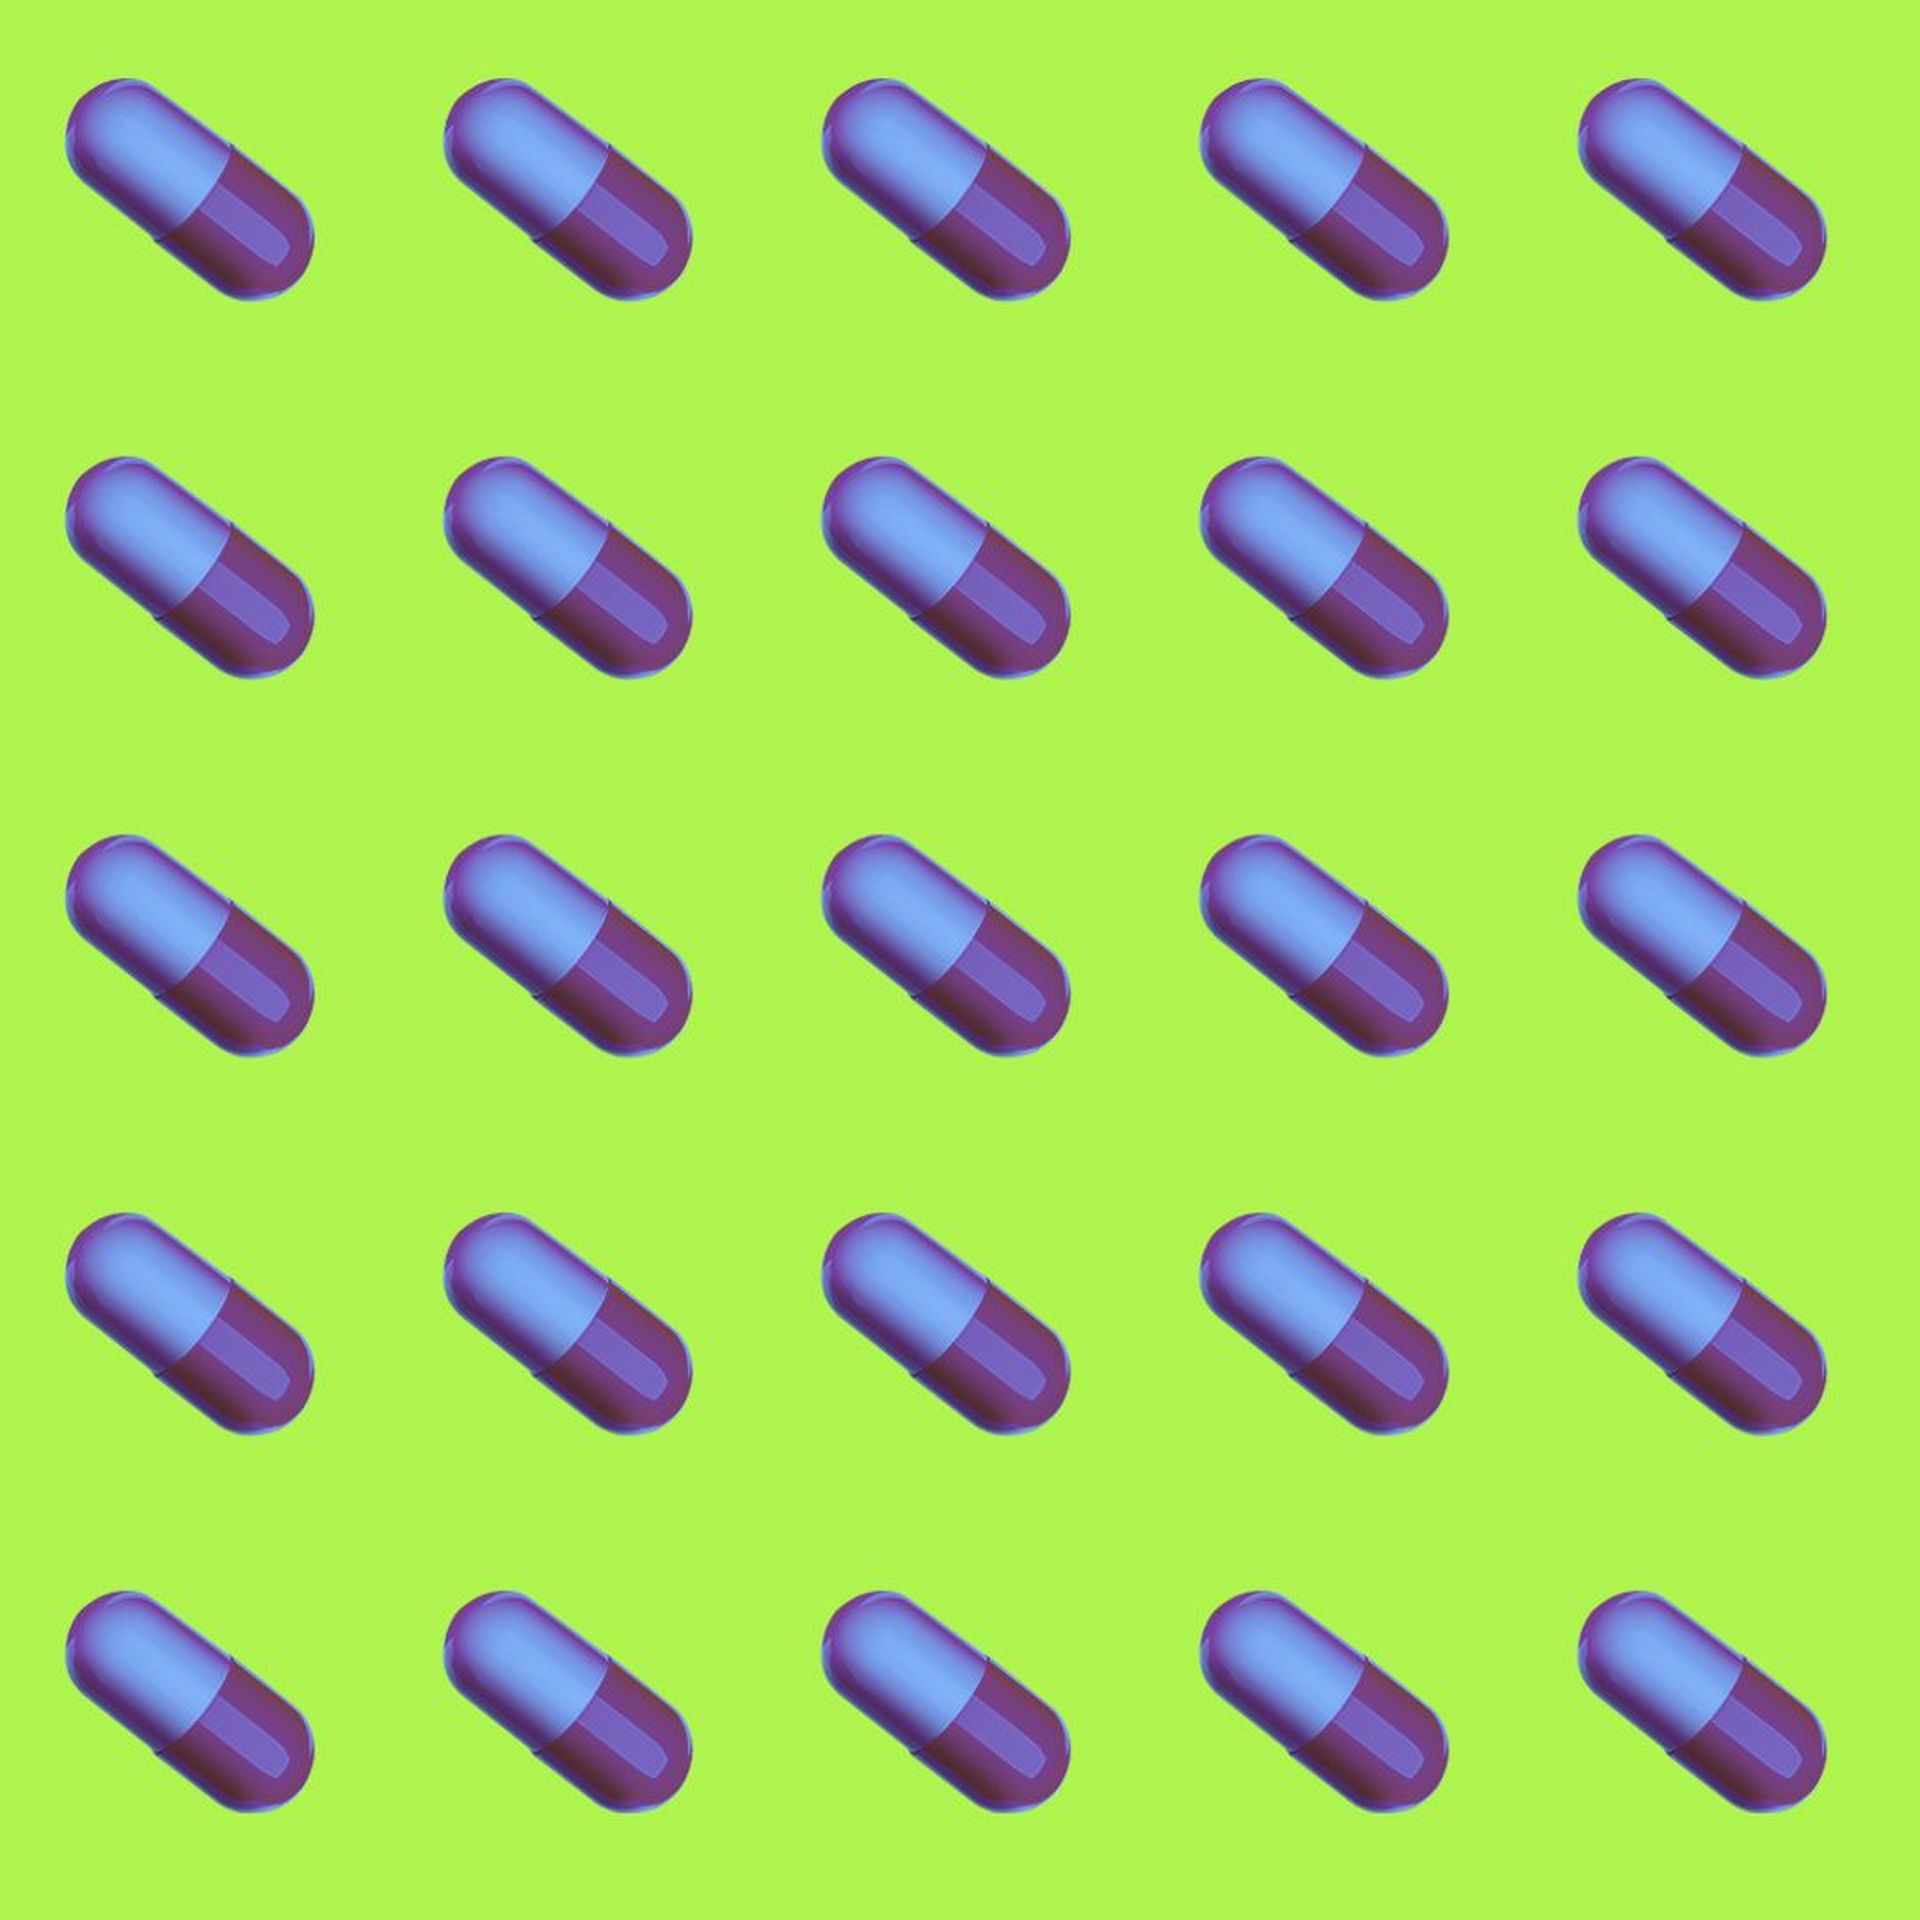 Illustration of a pattern of pills